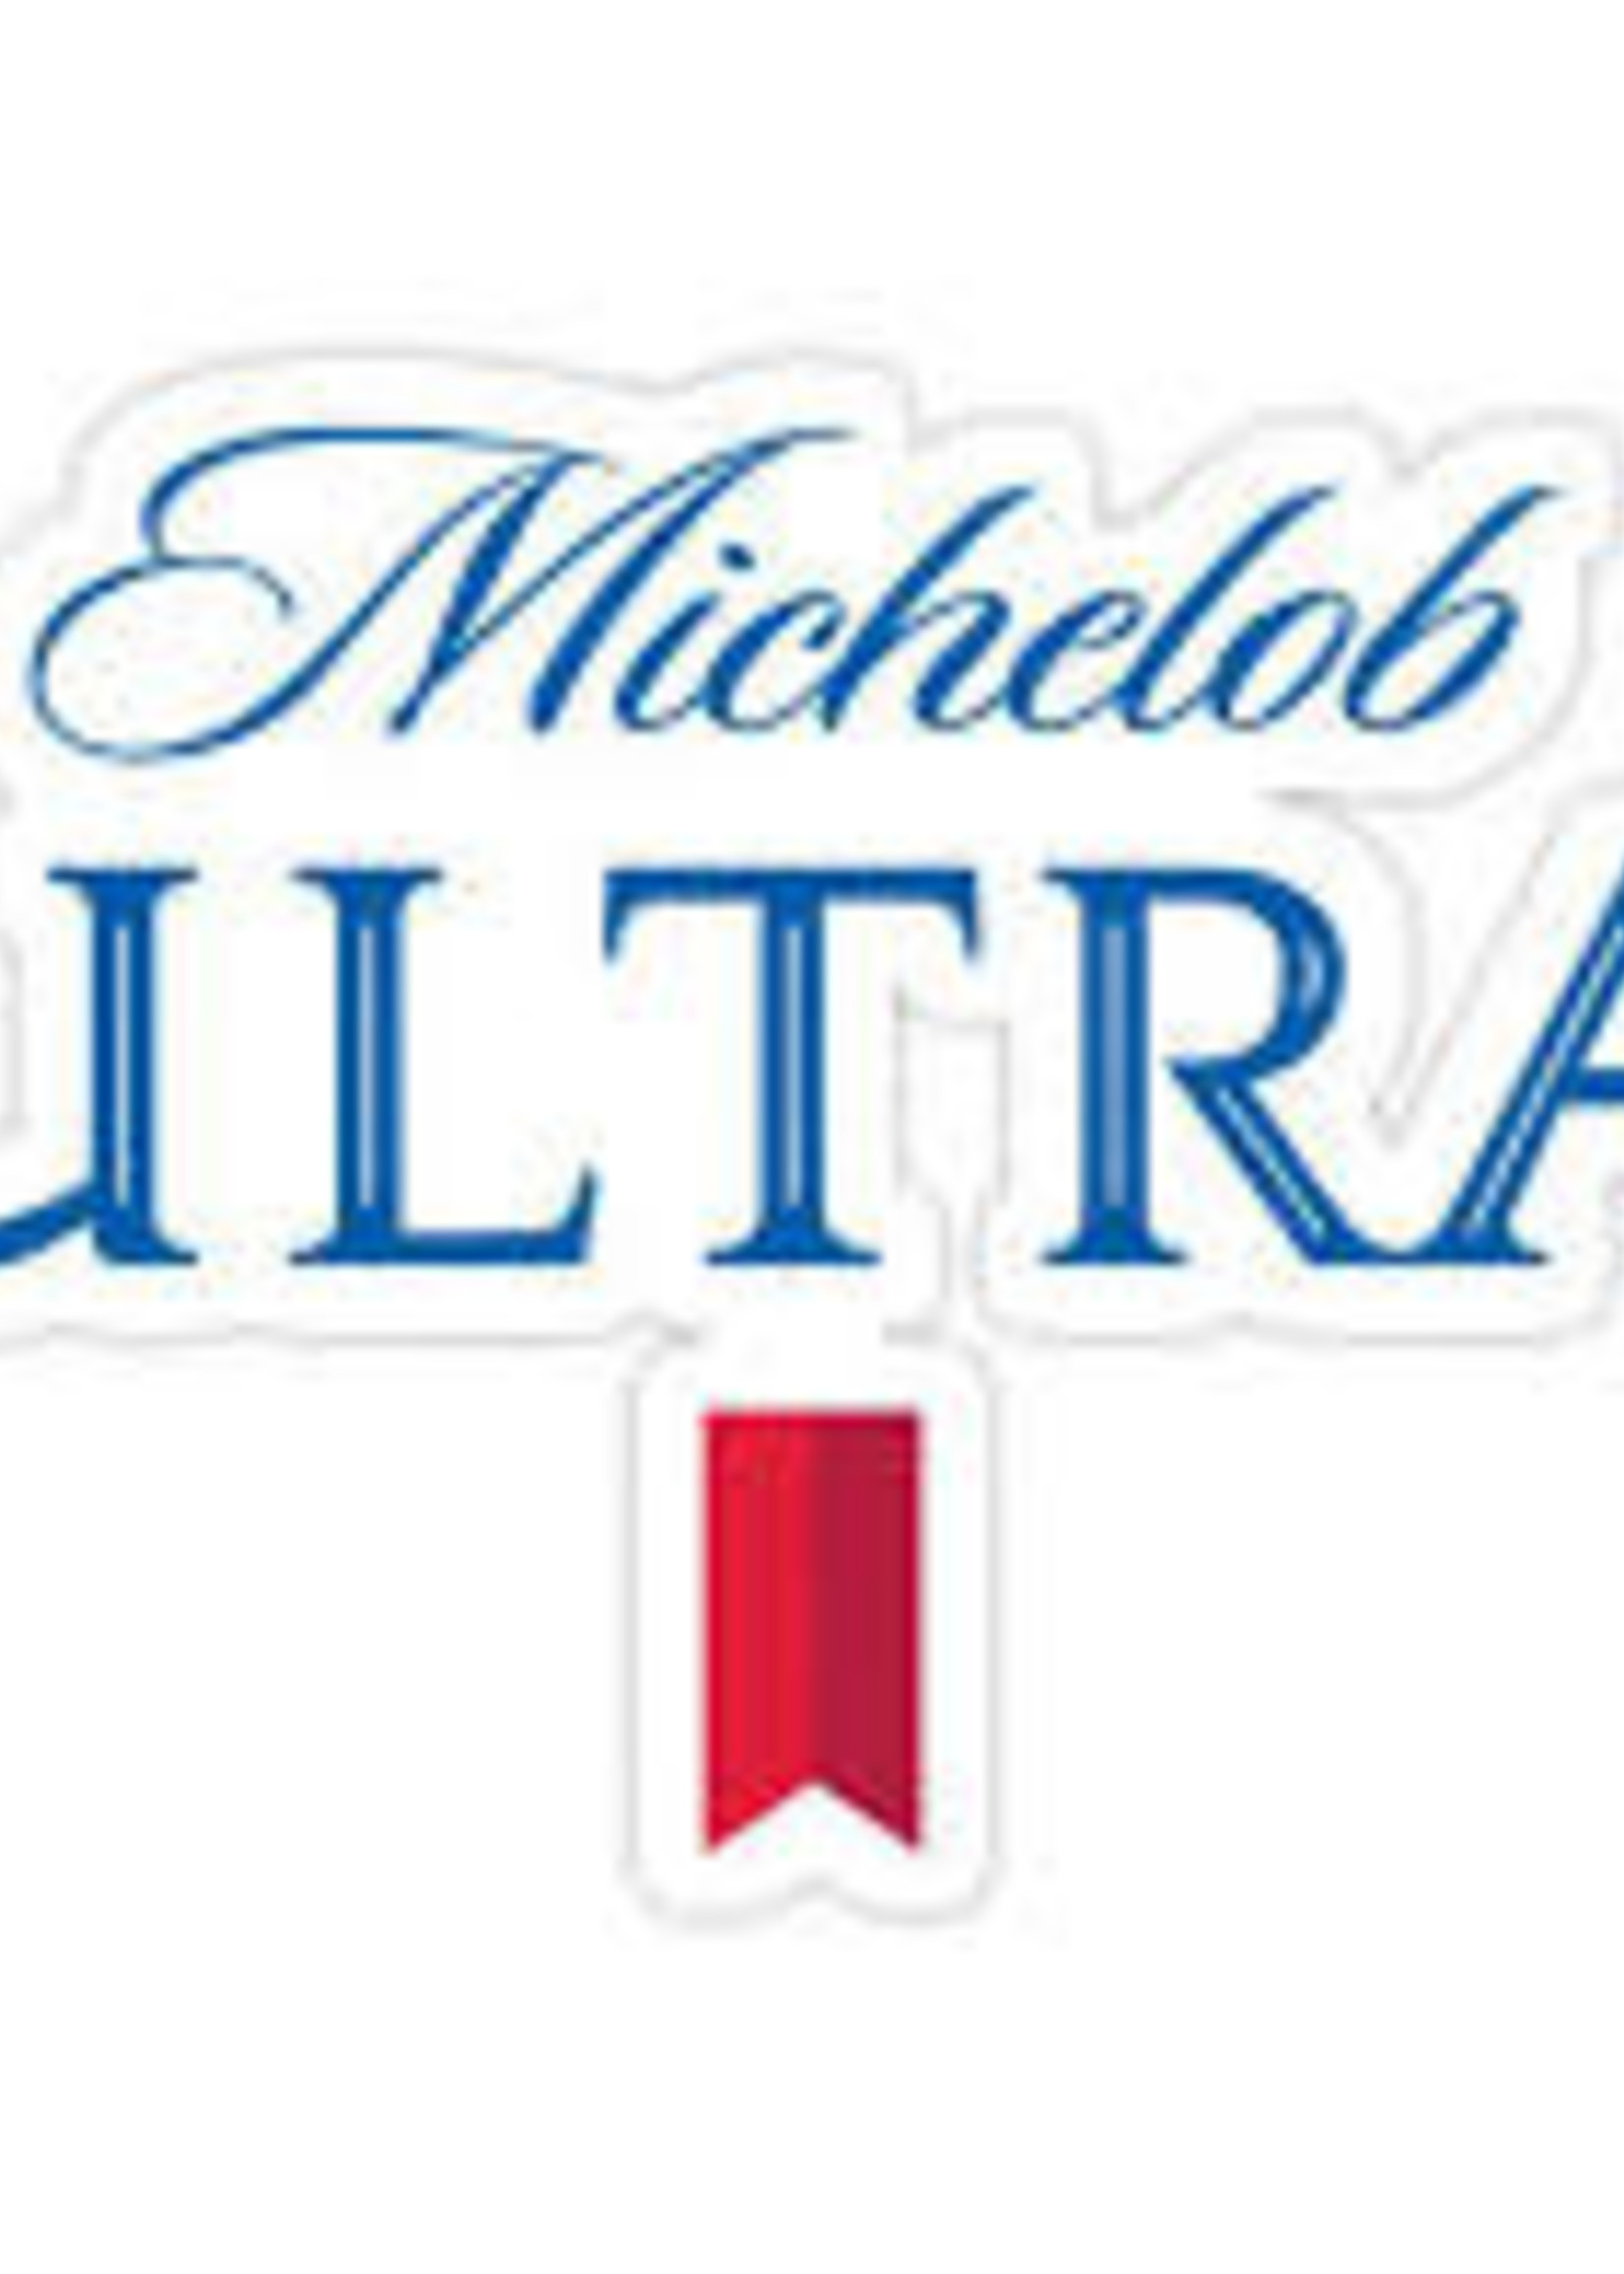 Michelob Ultra Full Keg SE